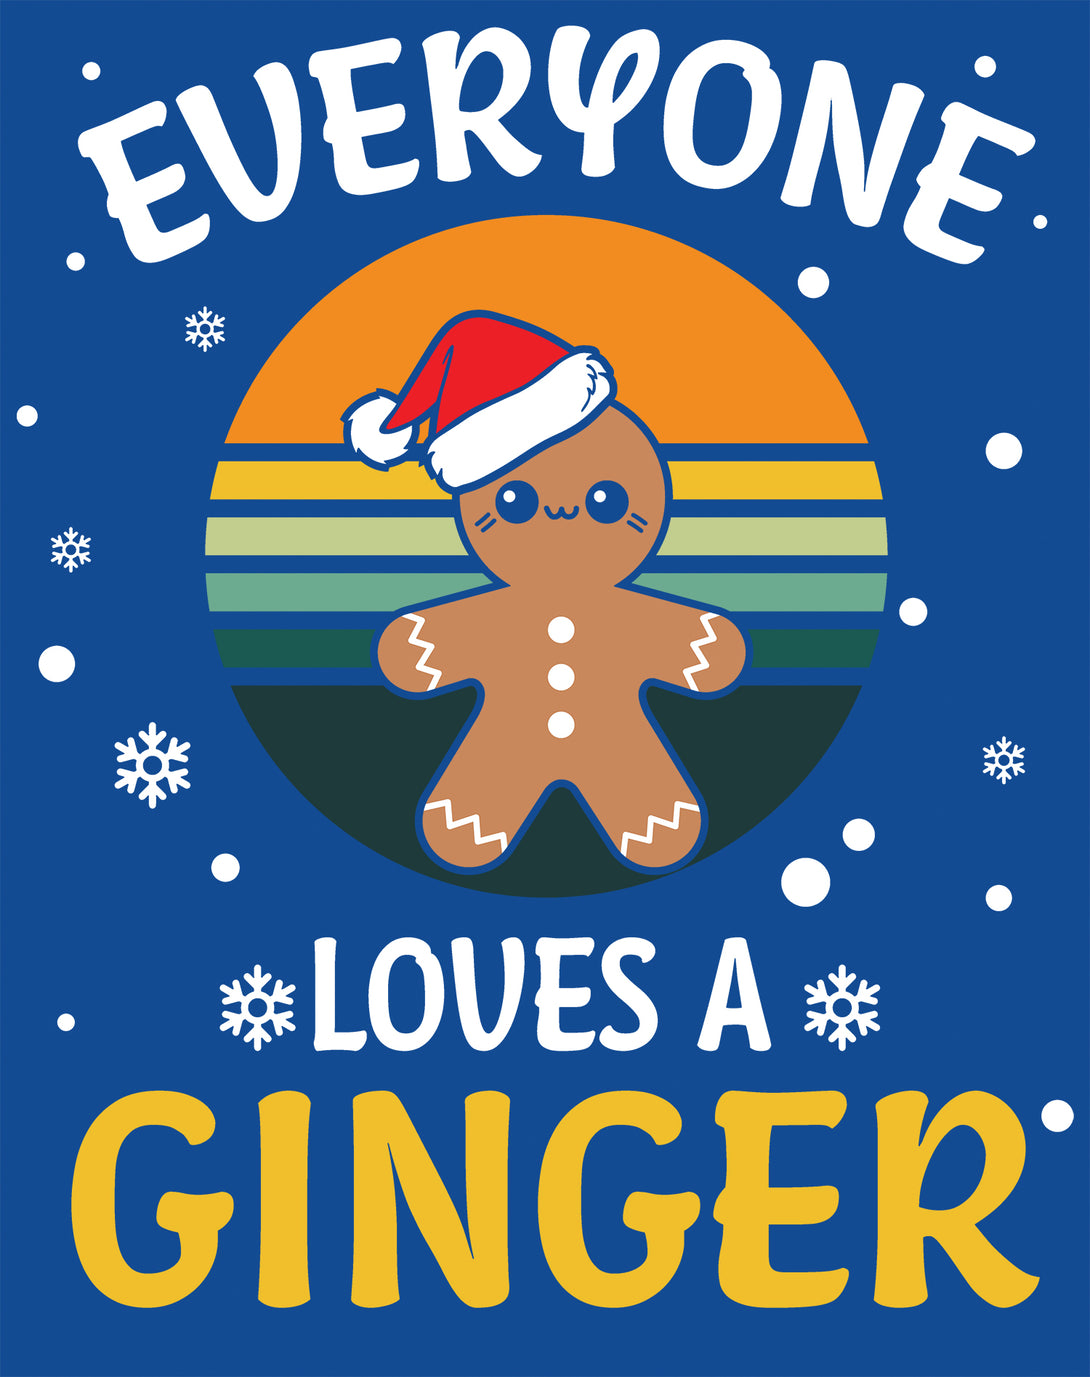 Christmas Ginger Everyone Loves Meme Fun Gingerbread Man Lol Women's T-Shirt Blue - Urban Species Design Close Up